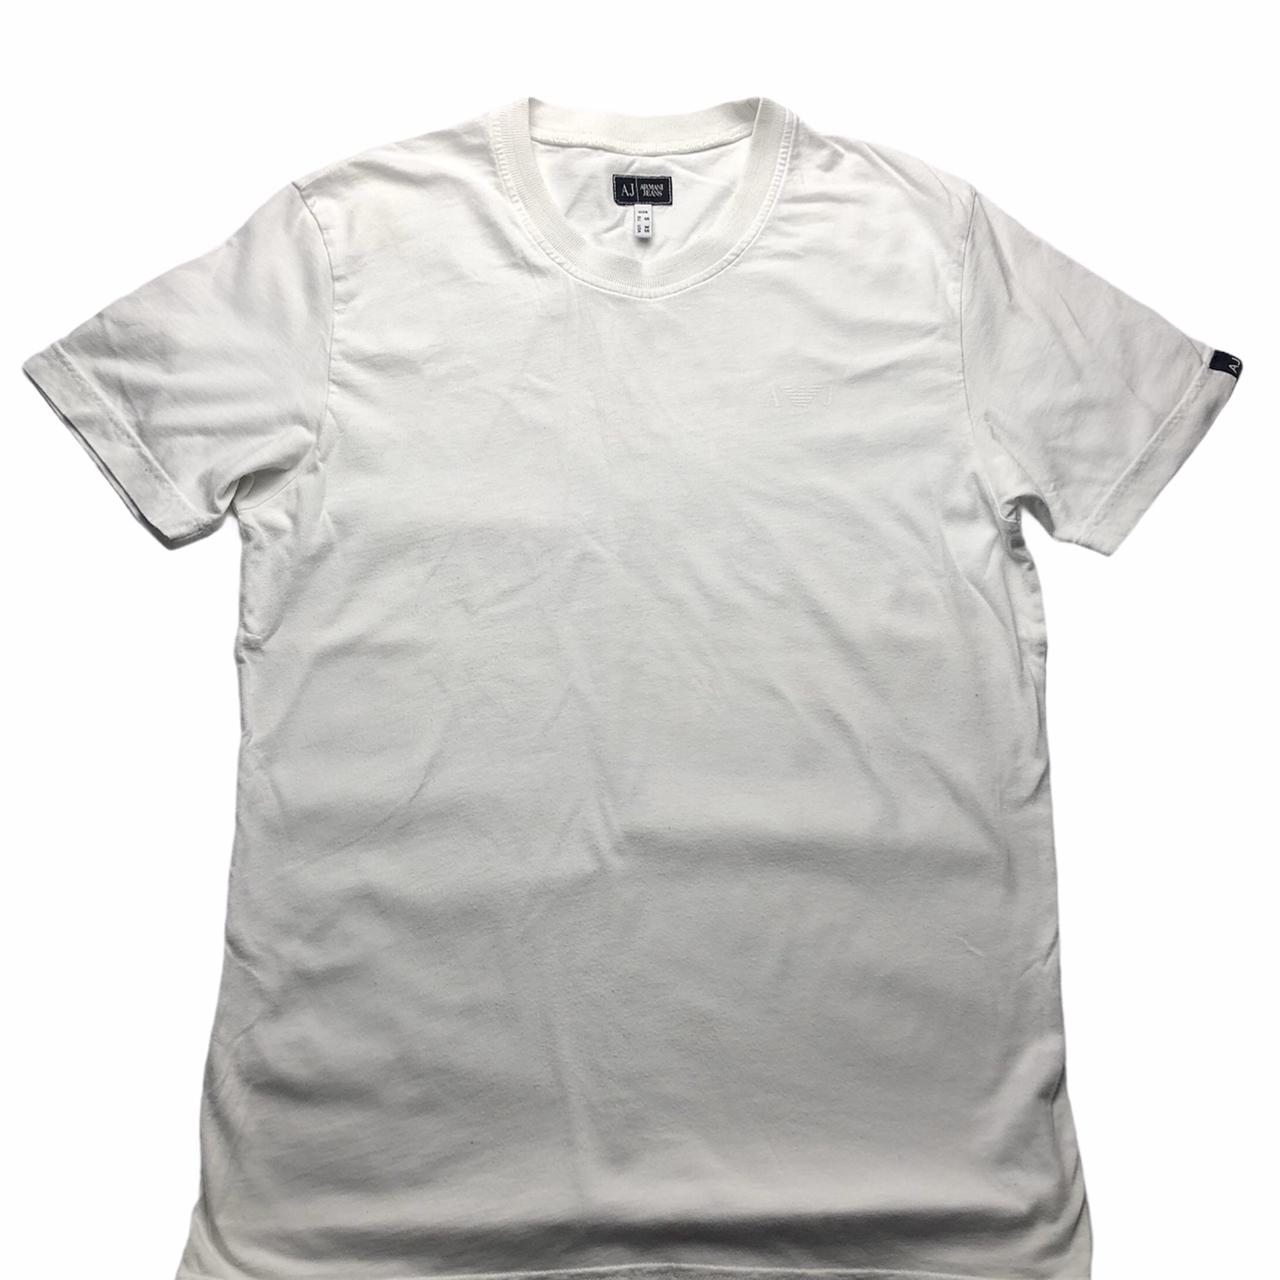 Armani Men's White and Navy T-shirt | Depop